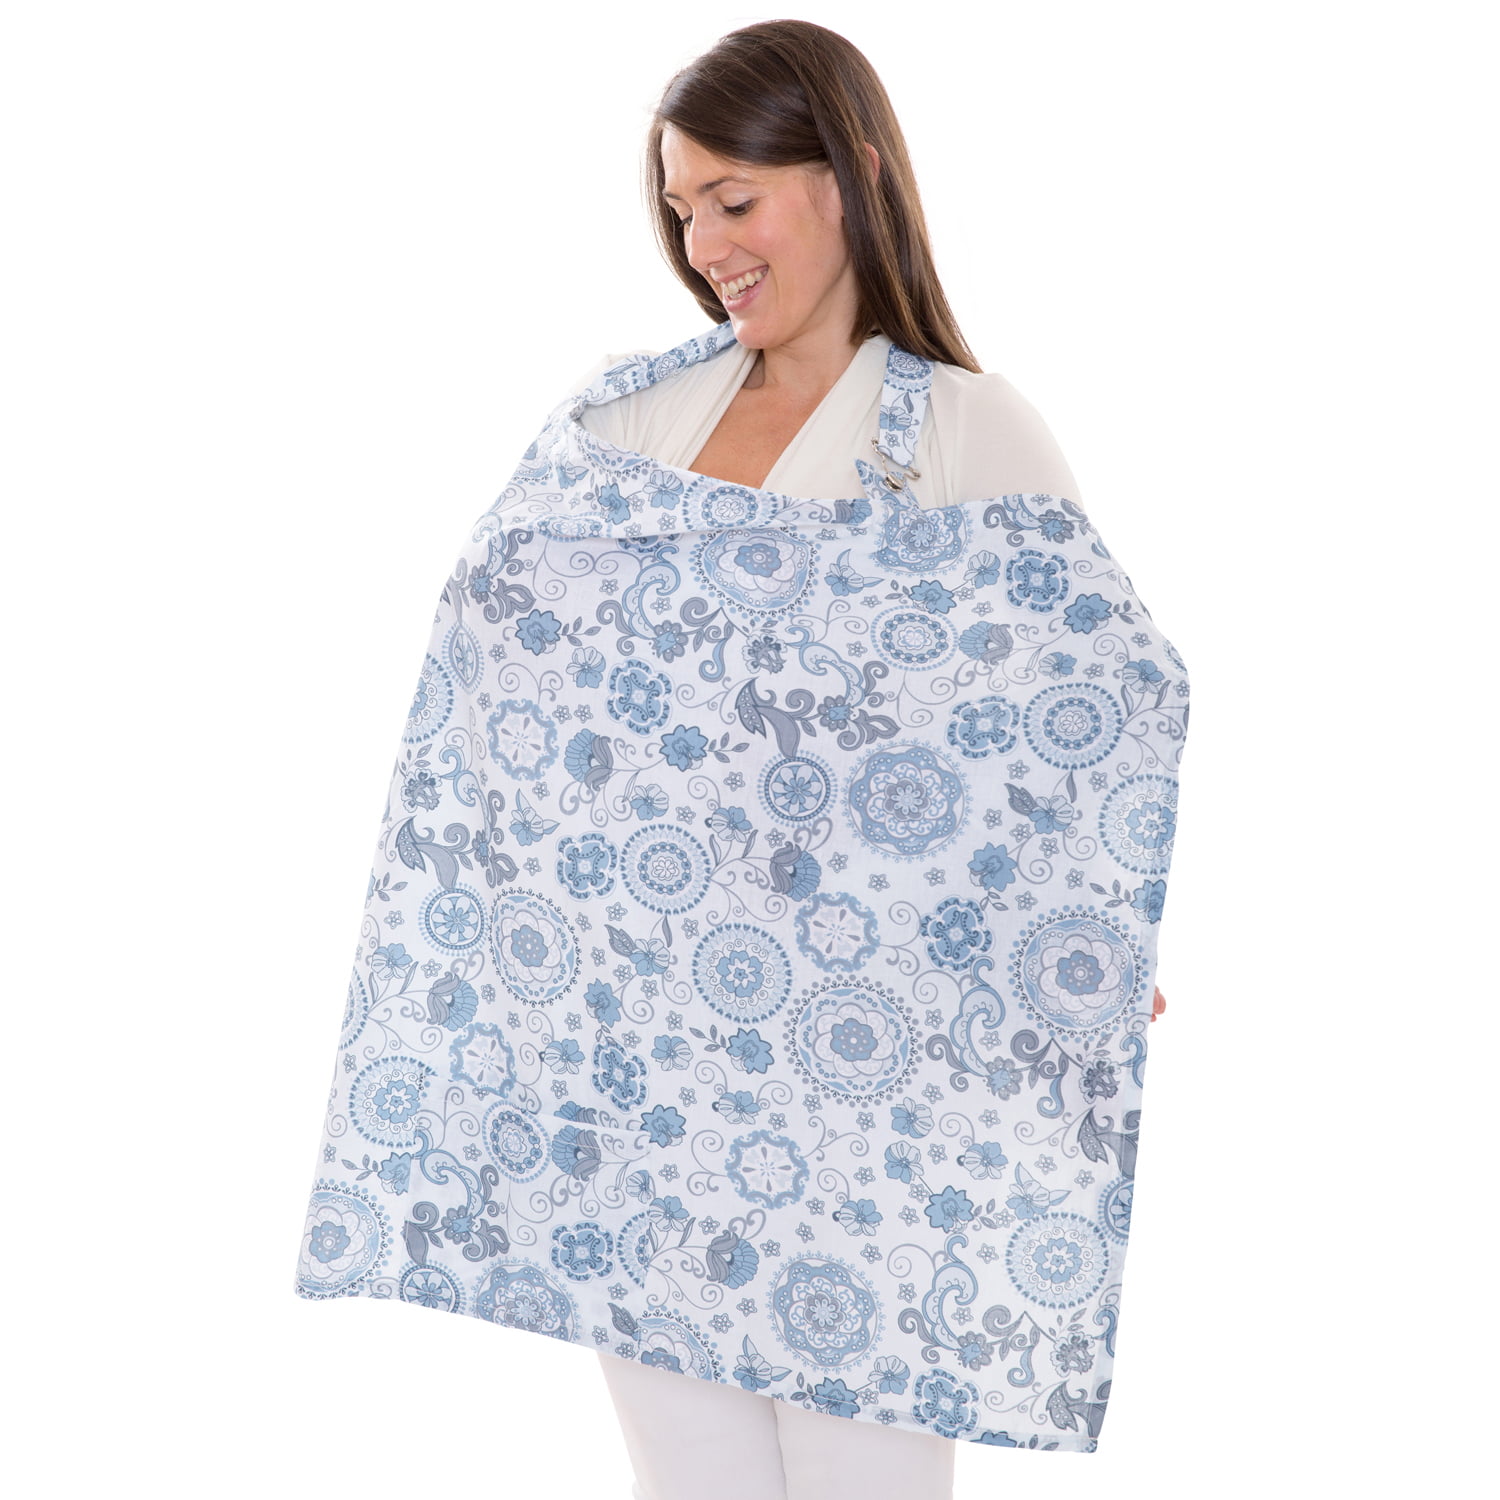 Bright Multi Spots Design New Breastfeeding Apron Nursing Cover